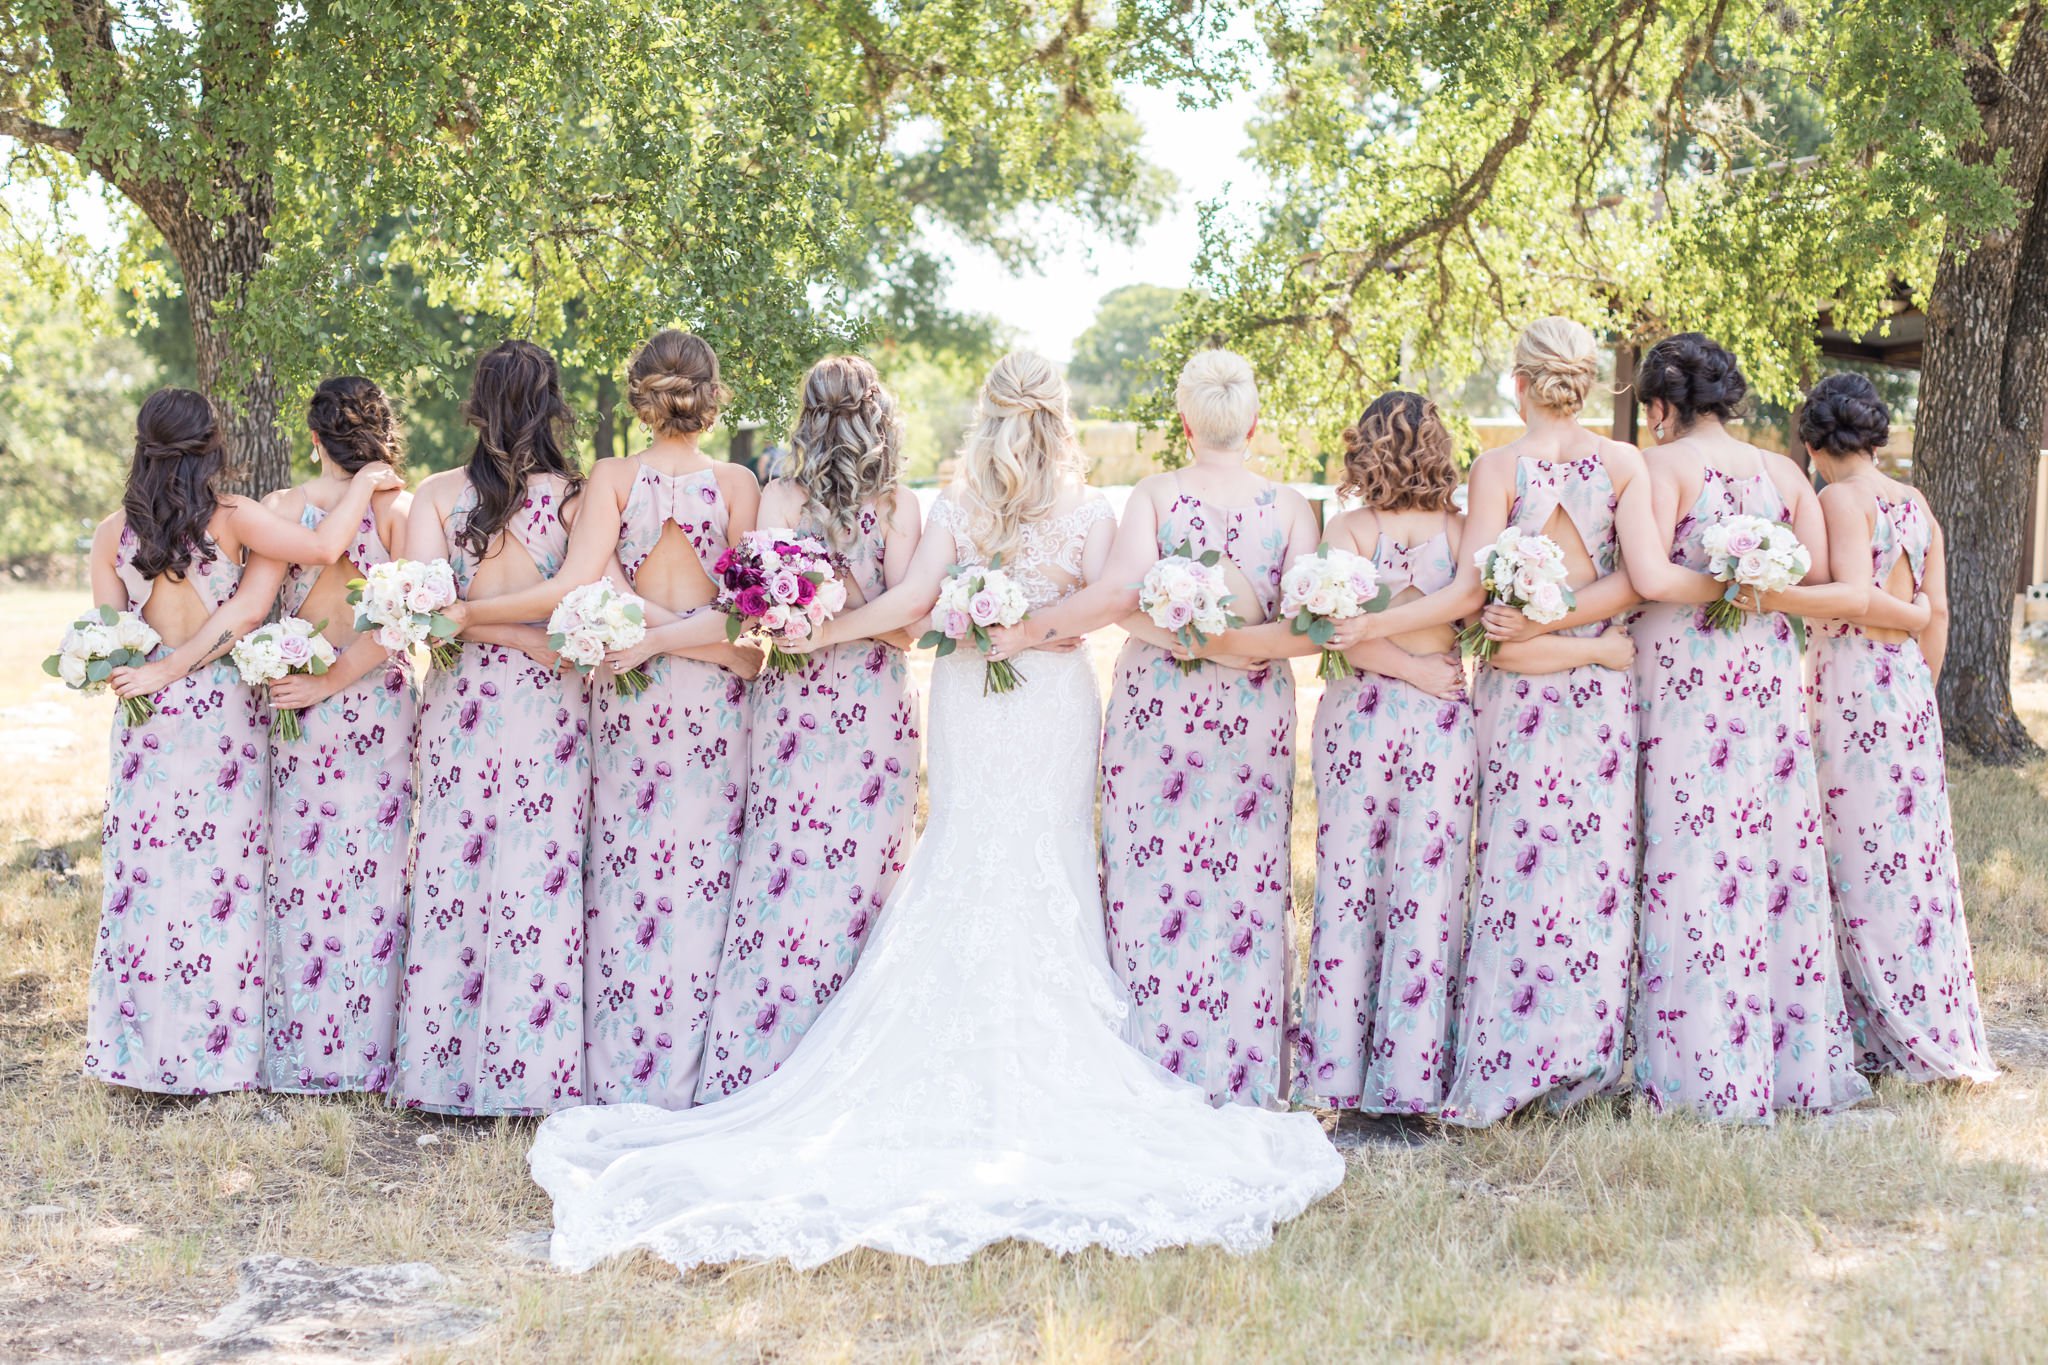 A Blush and Plum Vintage Wedding at CW Hill Country Ranch in Boerne, TX by Dawn Elizabeth Studios, Boerne Wedding Photographer